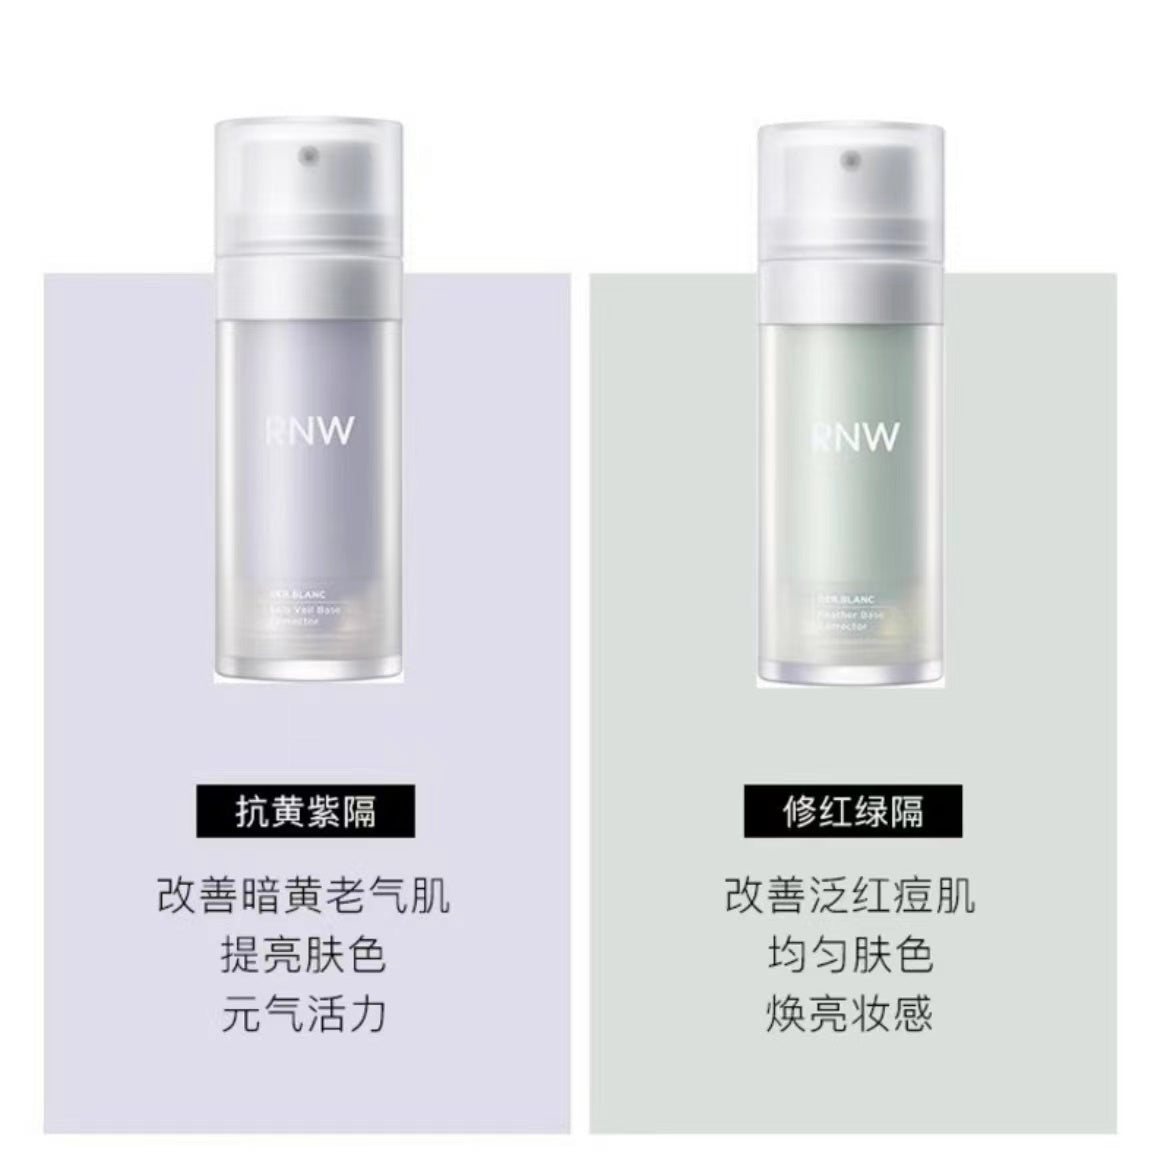 RNW Veil Moisturizing Cream Face Primer 30g 如薇雪纱柔润隔离霜